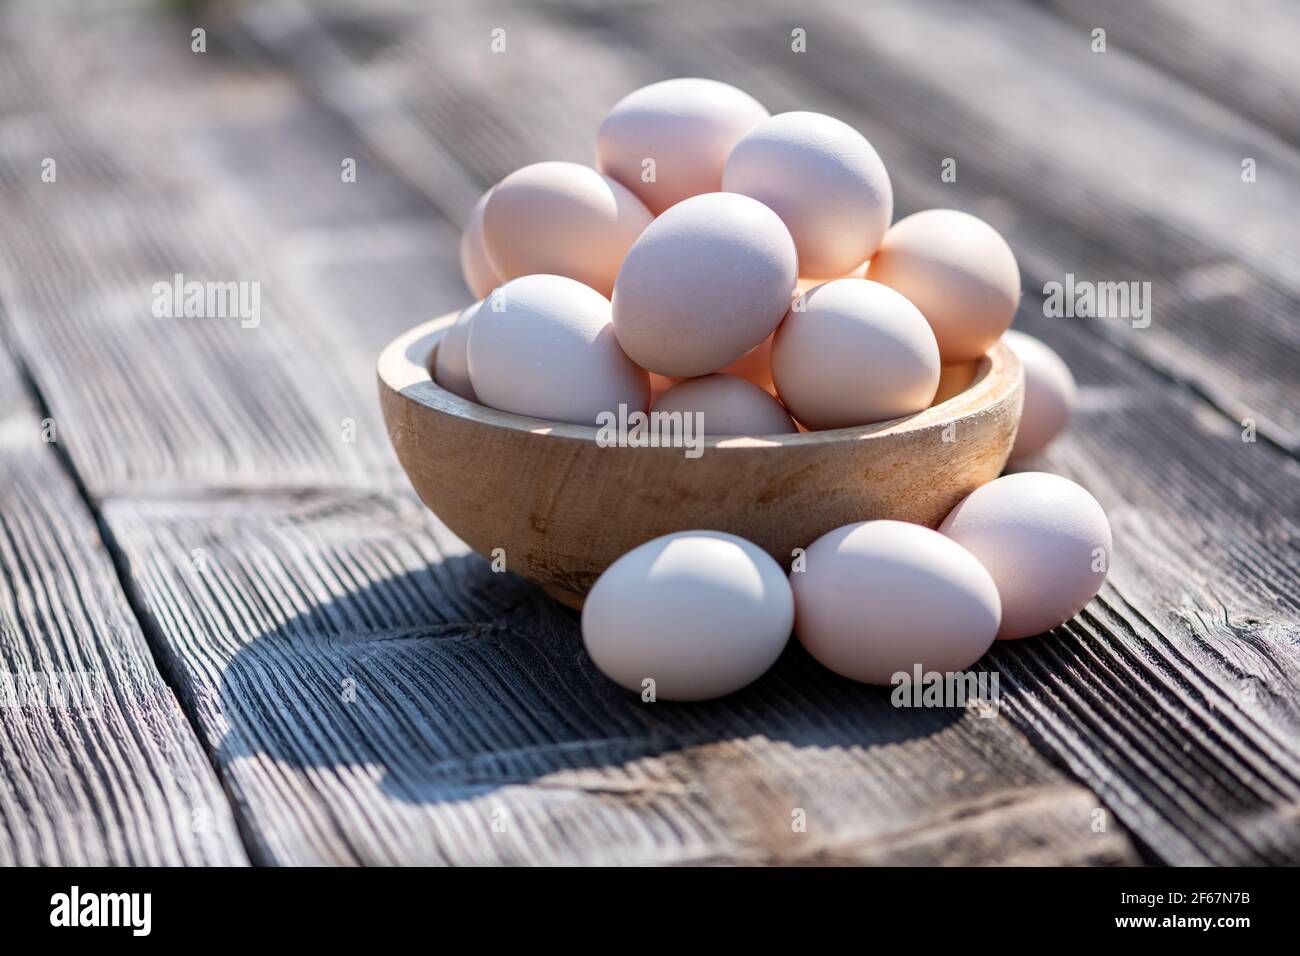 Huevos de pollo orgánicos en plato de madera Foto de stock